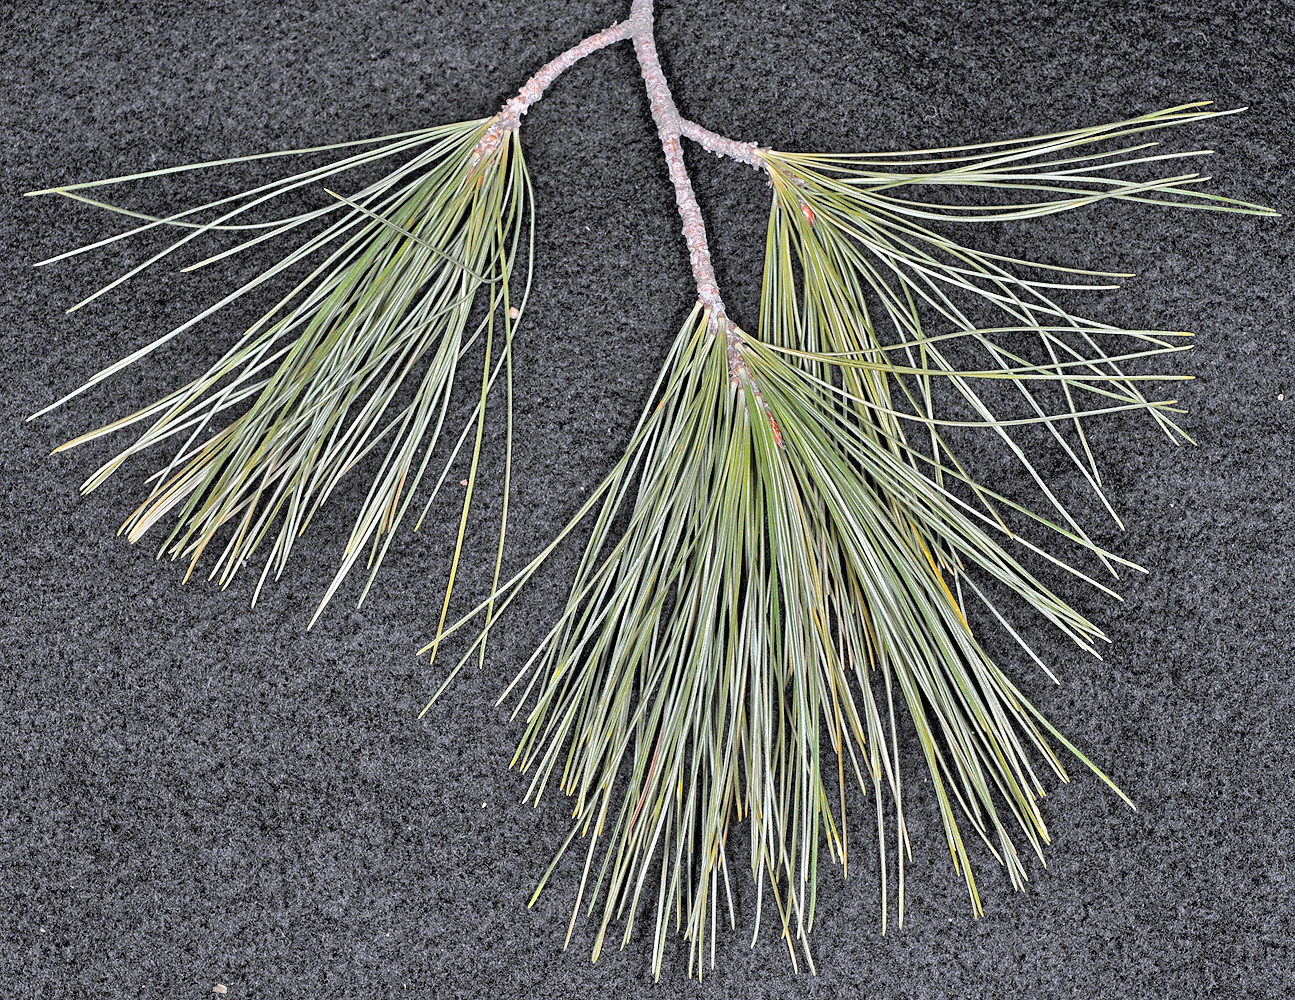 Flora of Eastern Washington Image: Pinus monticola